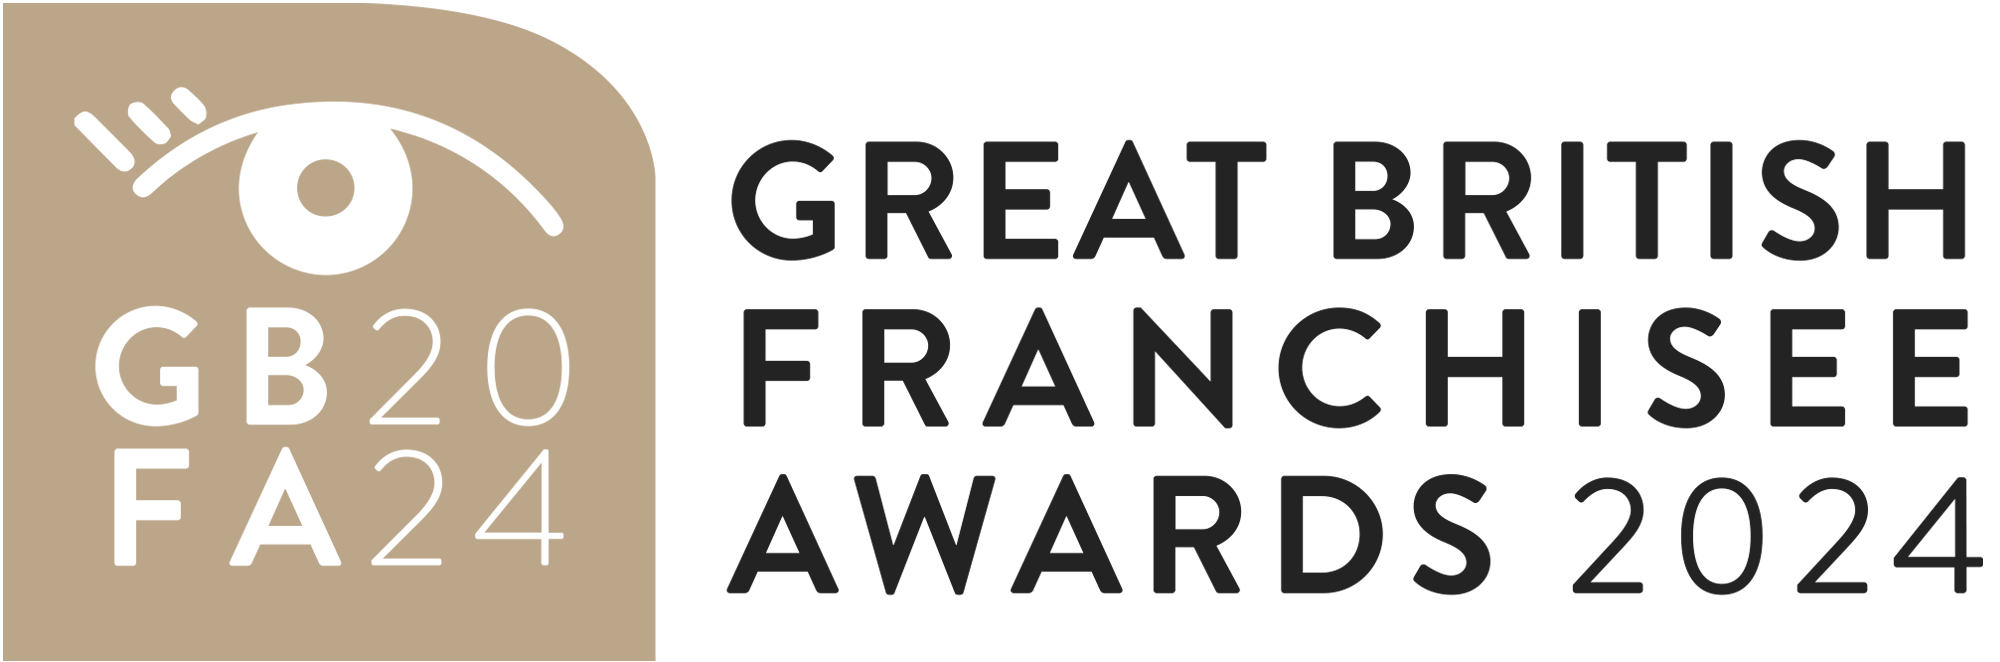 Great British Franchisee award logo